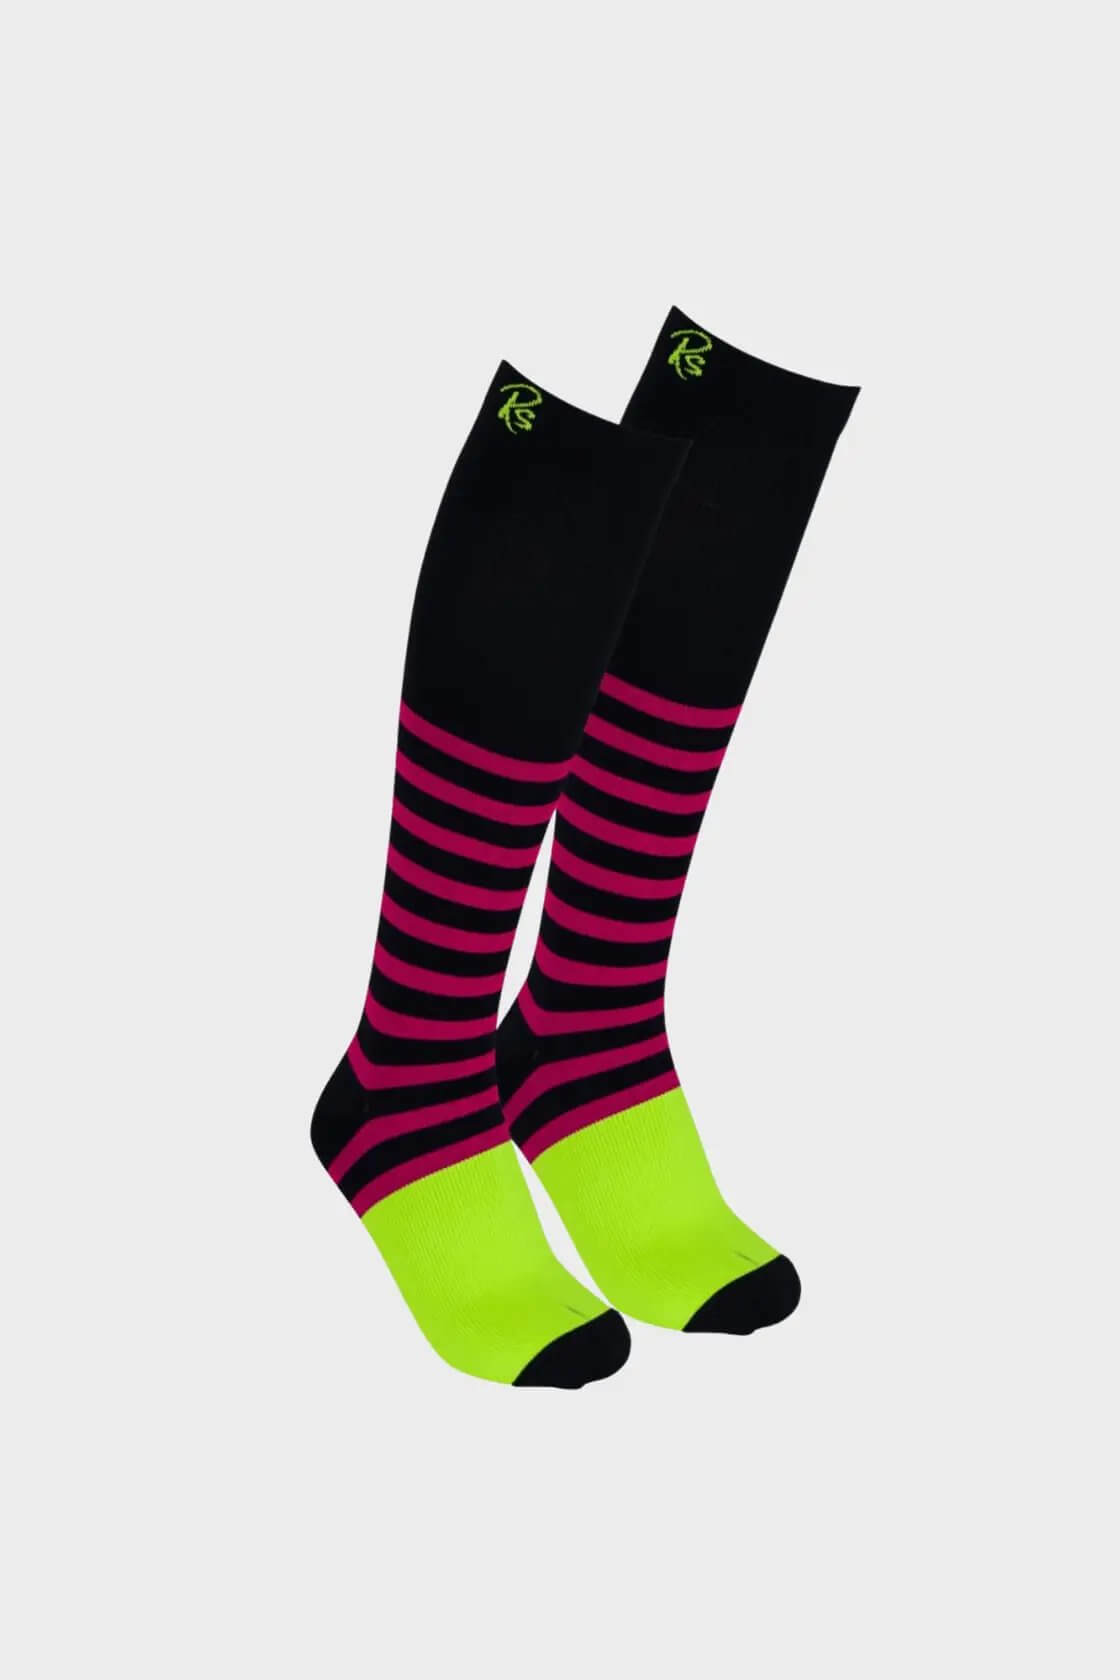 Knee High Compression Socks - Rocca & Co